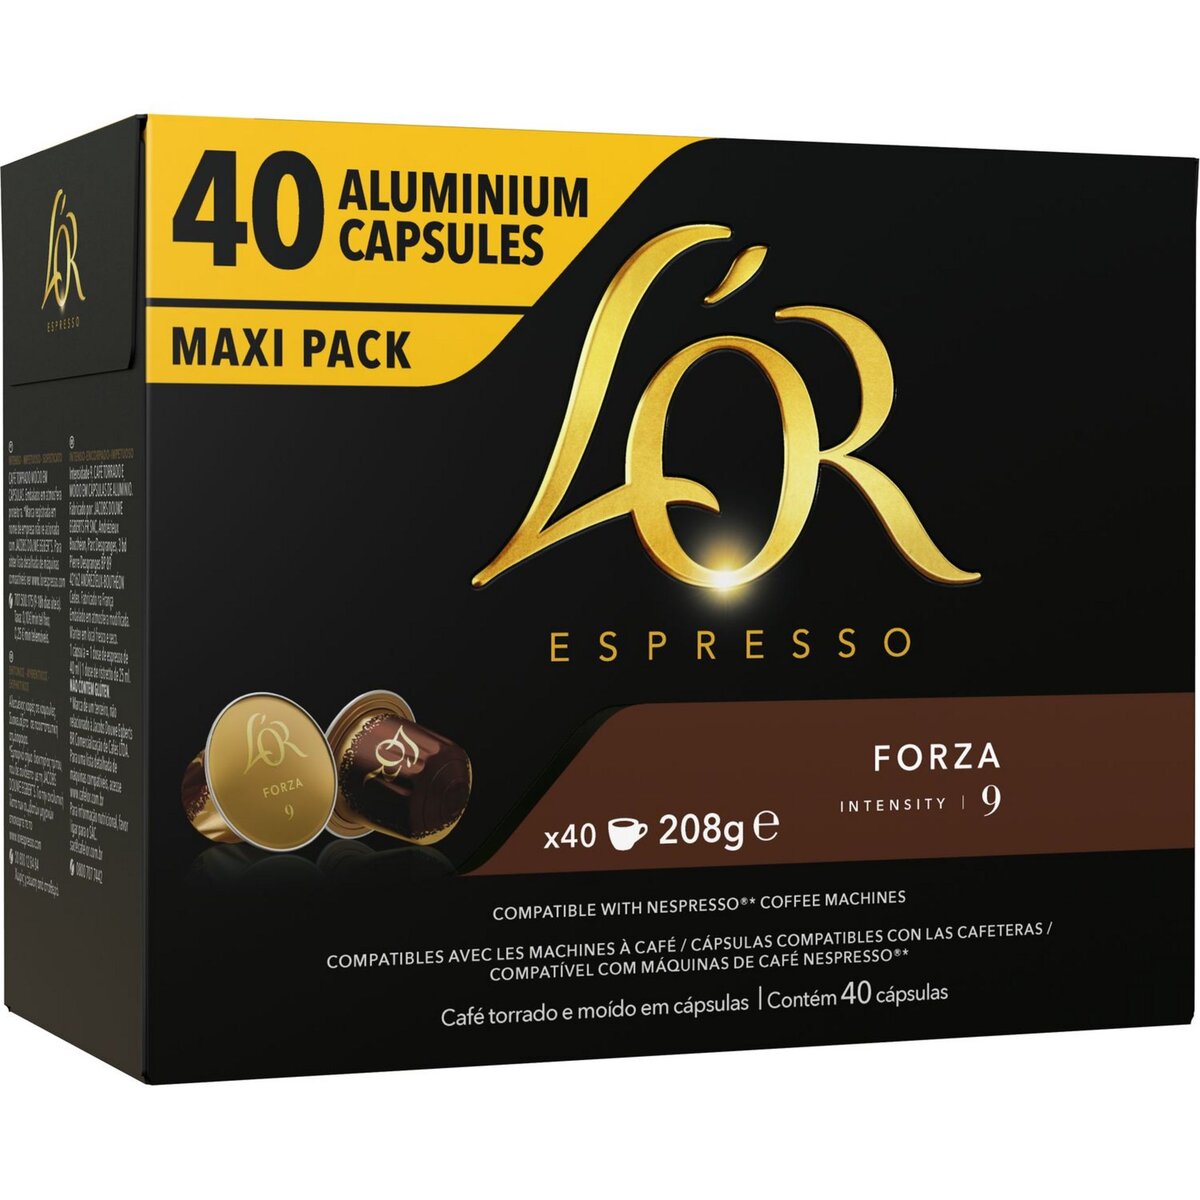 L'OR Capsules de café forza intensité 9 compatibles Nespresso 40 capsules 208g